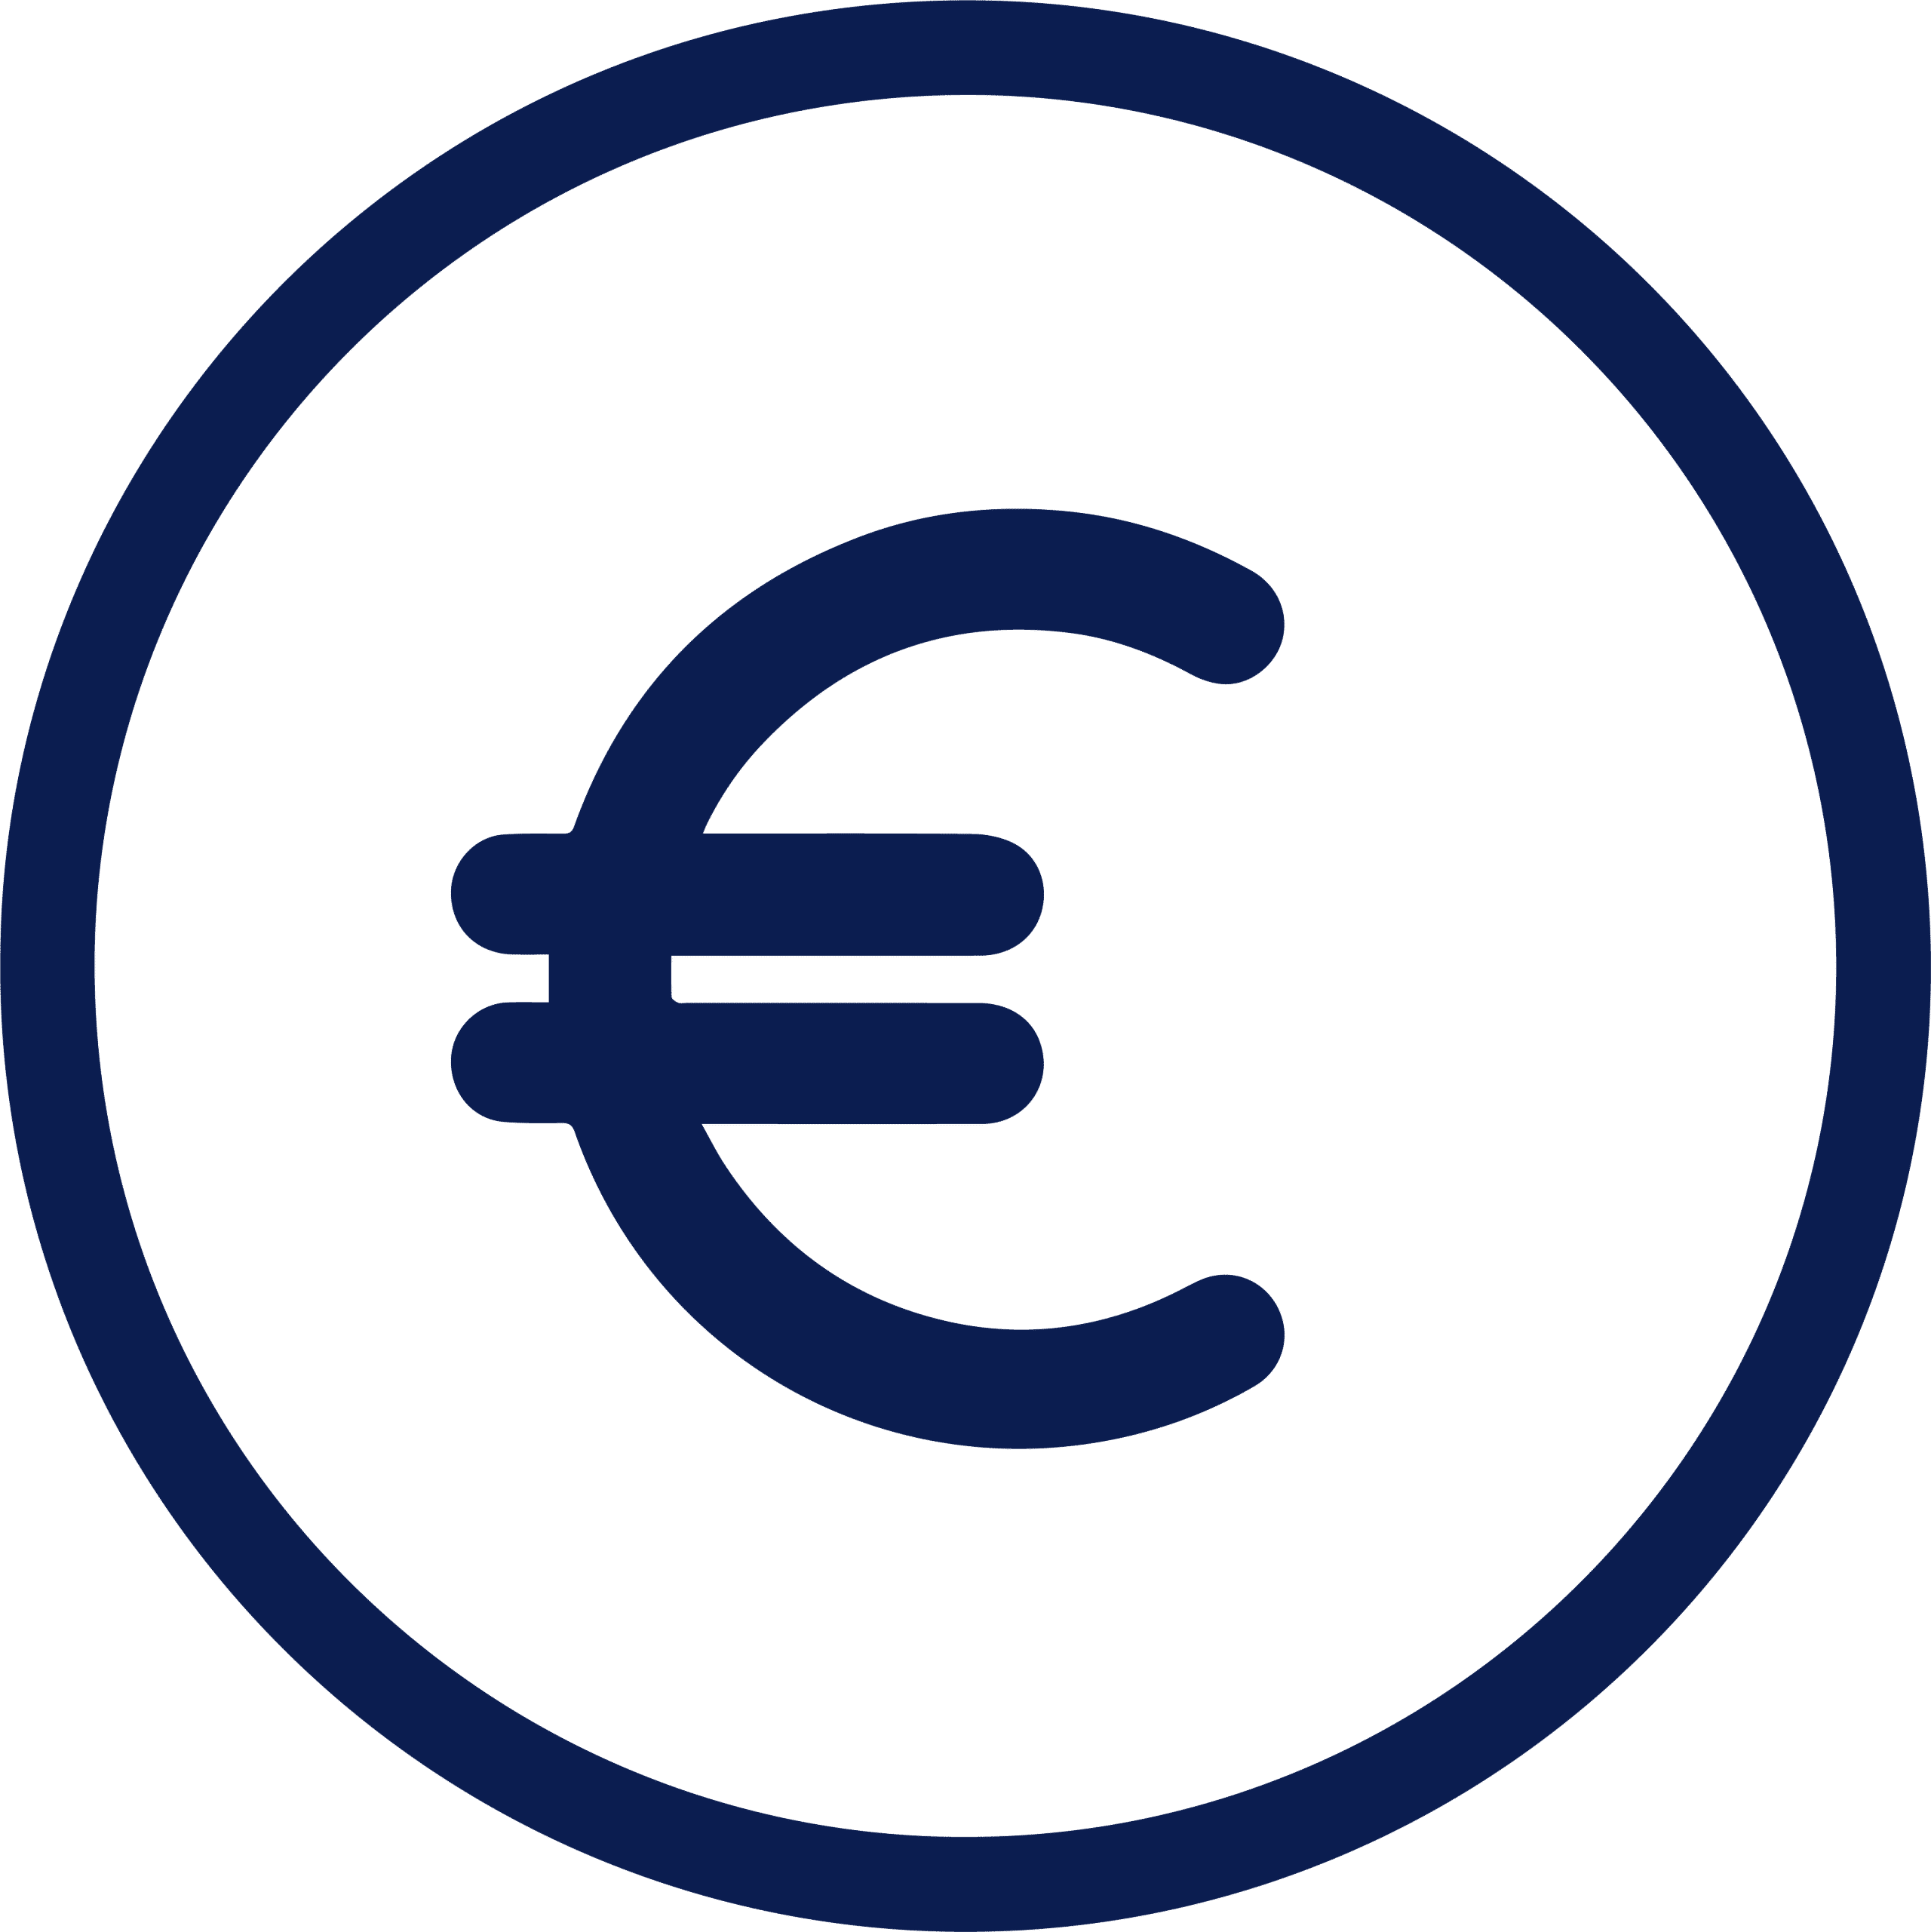 Cost savings - Euro sign